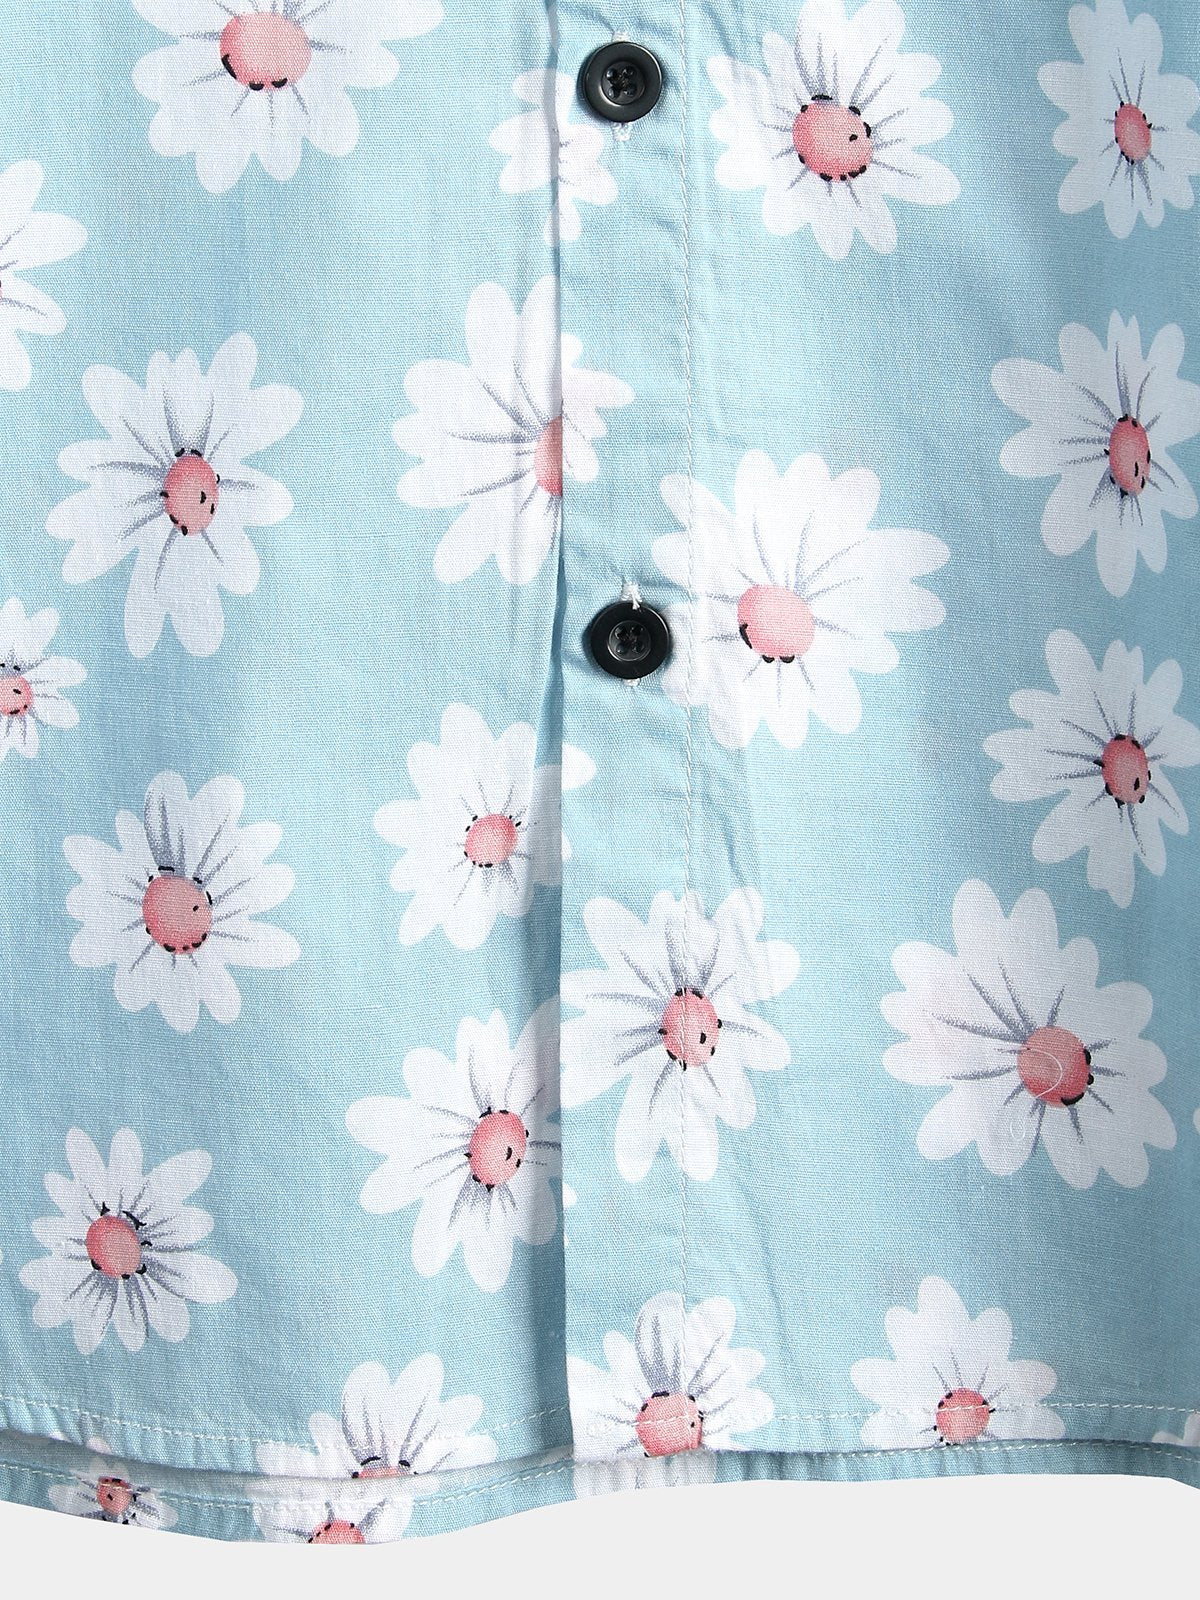 Casual Friday – Anton Flower Print Short Sleeve Shirt Ecru